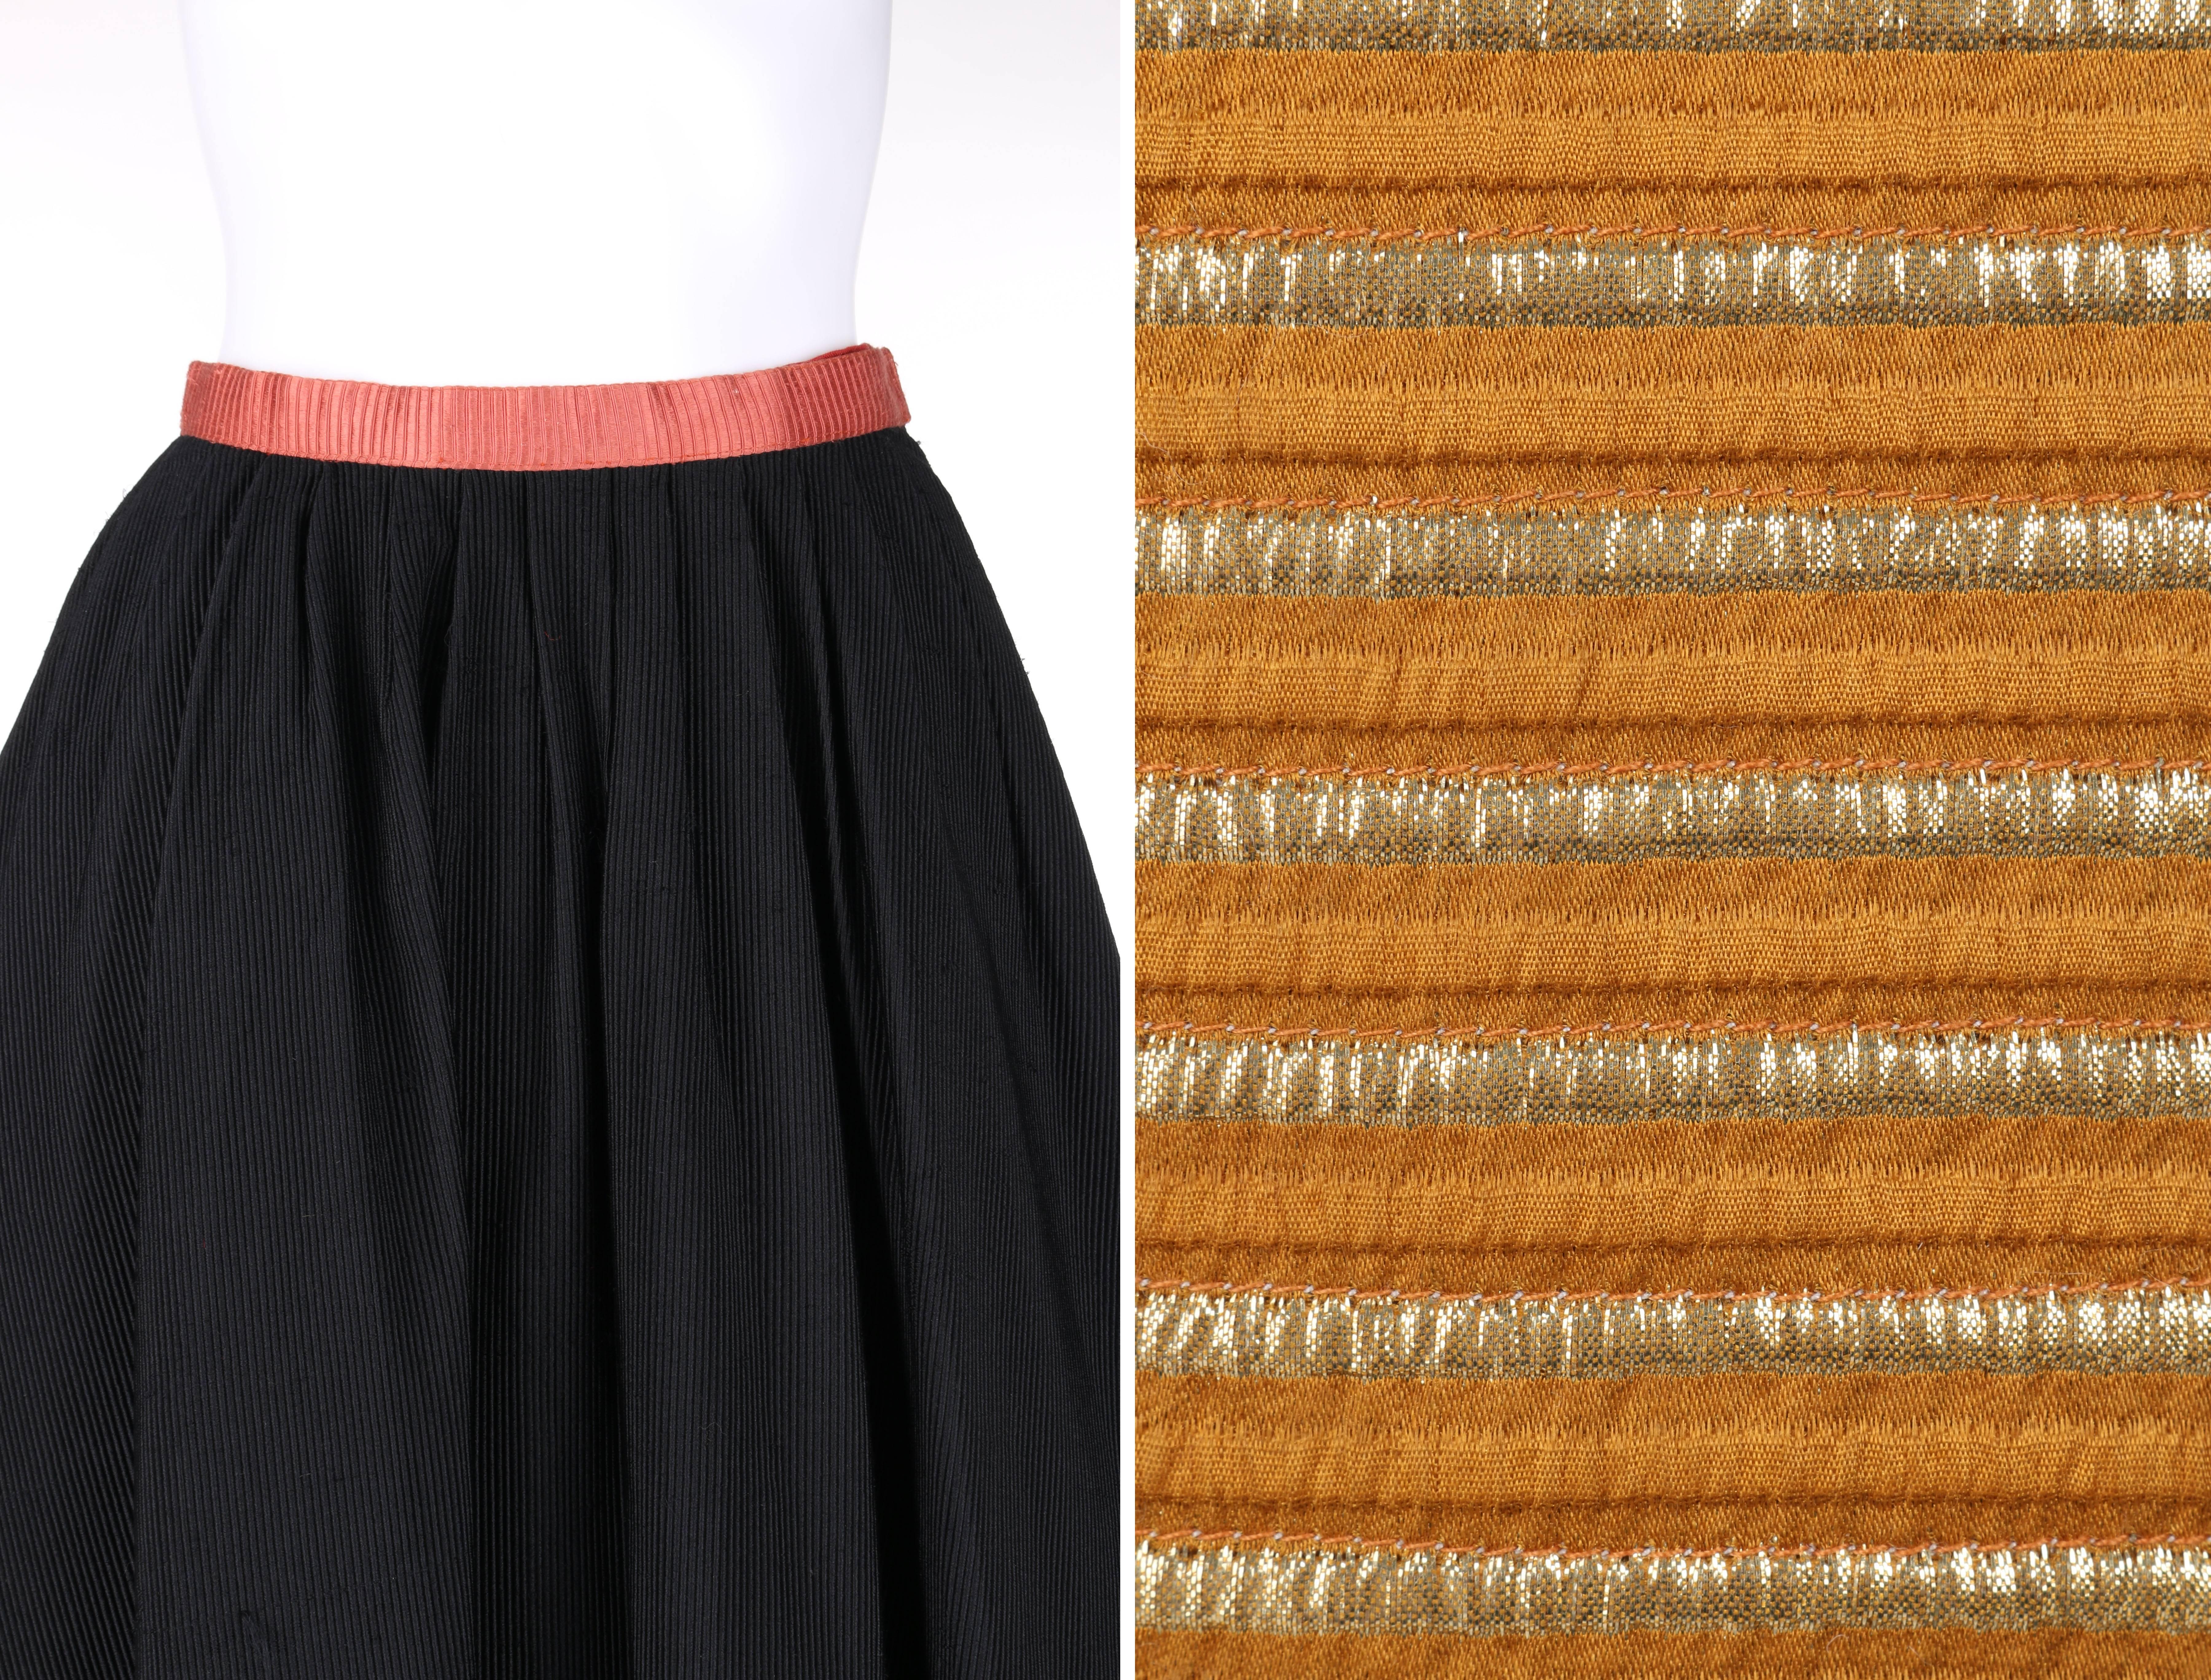 GEOFFREY BEENE c.1970's Black Silk Faille Metallic Gold Detail Skirt 2